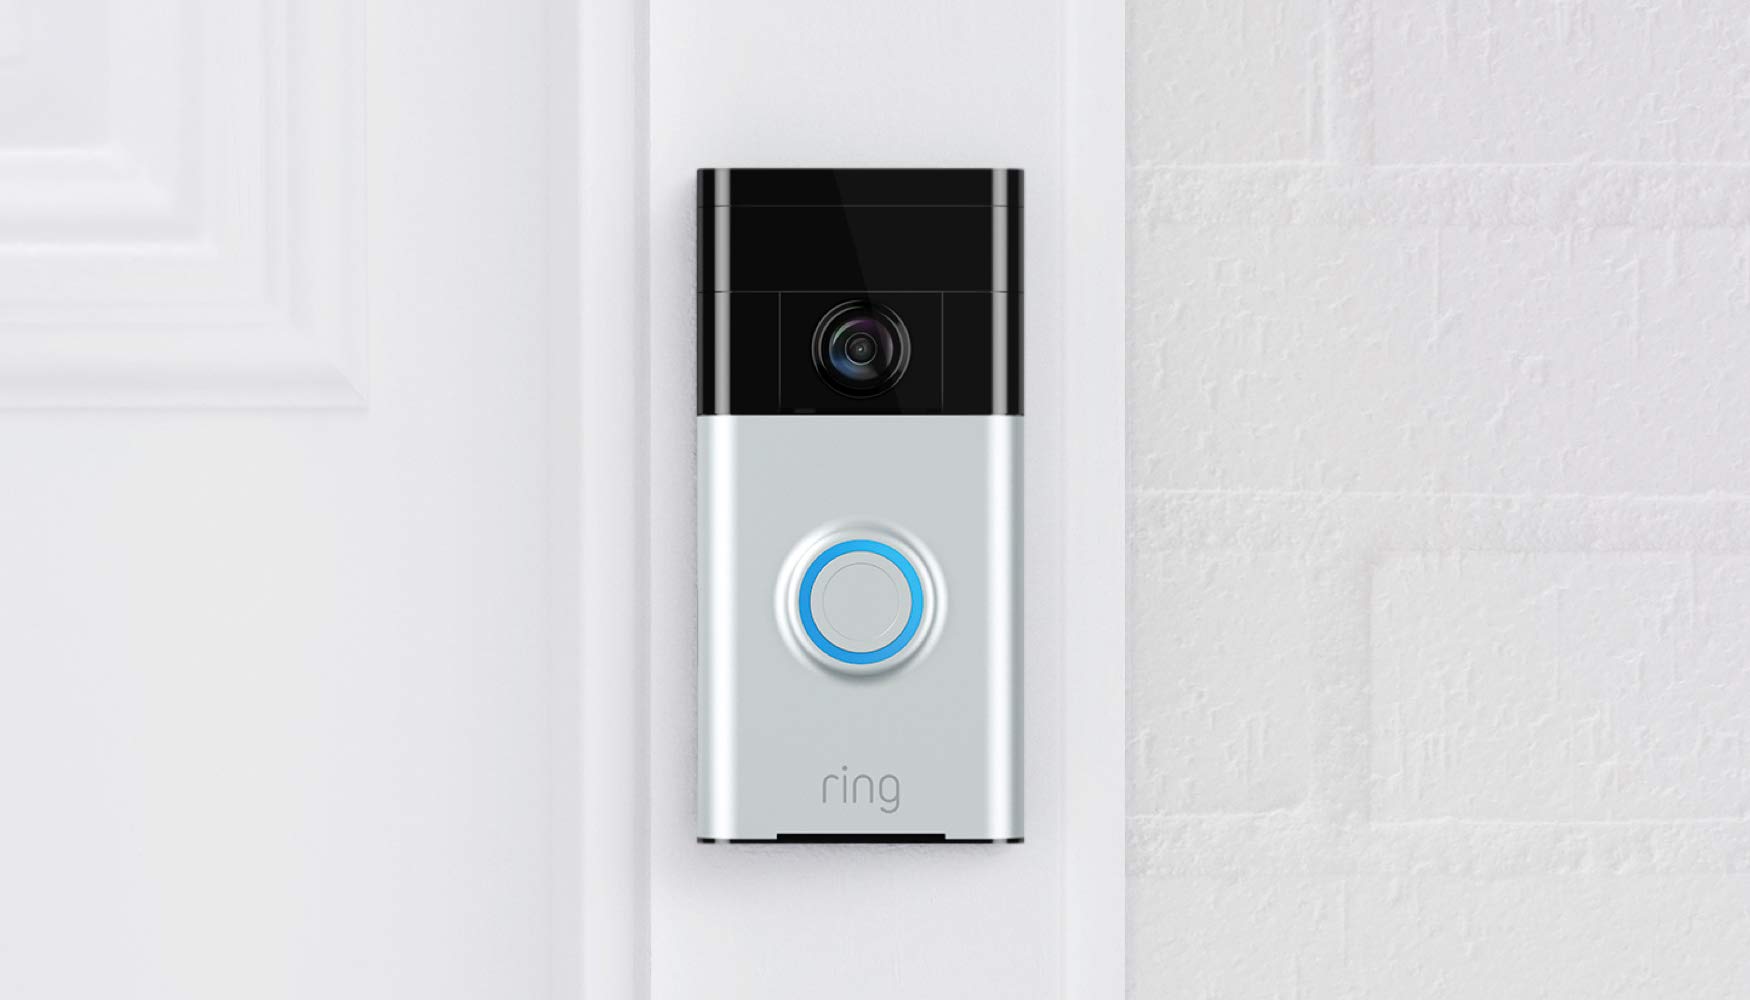 Ring Video Doorbell (1st Gen) – 720p HD video, motion activated alerts, easy installation – Satin Nickel